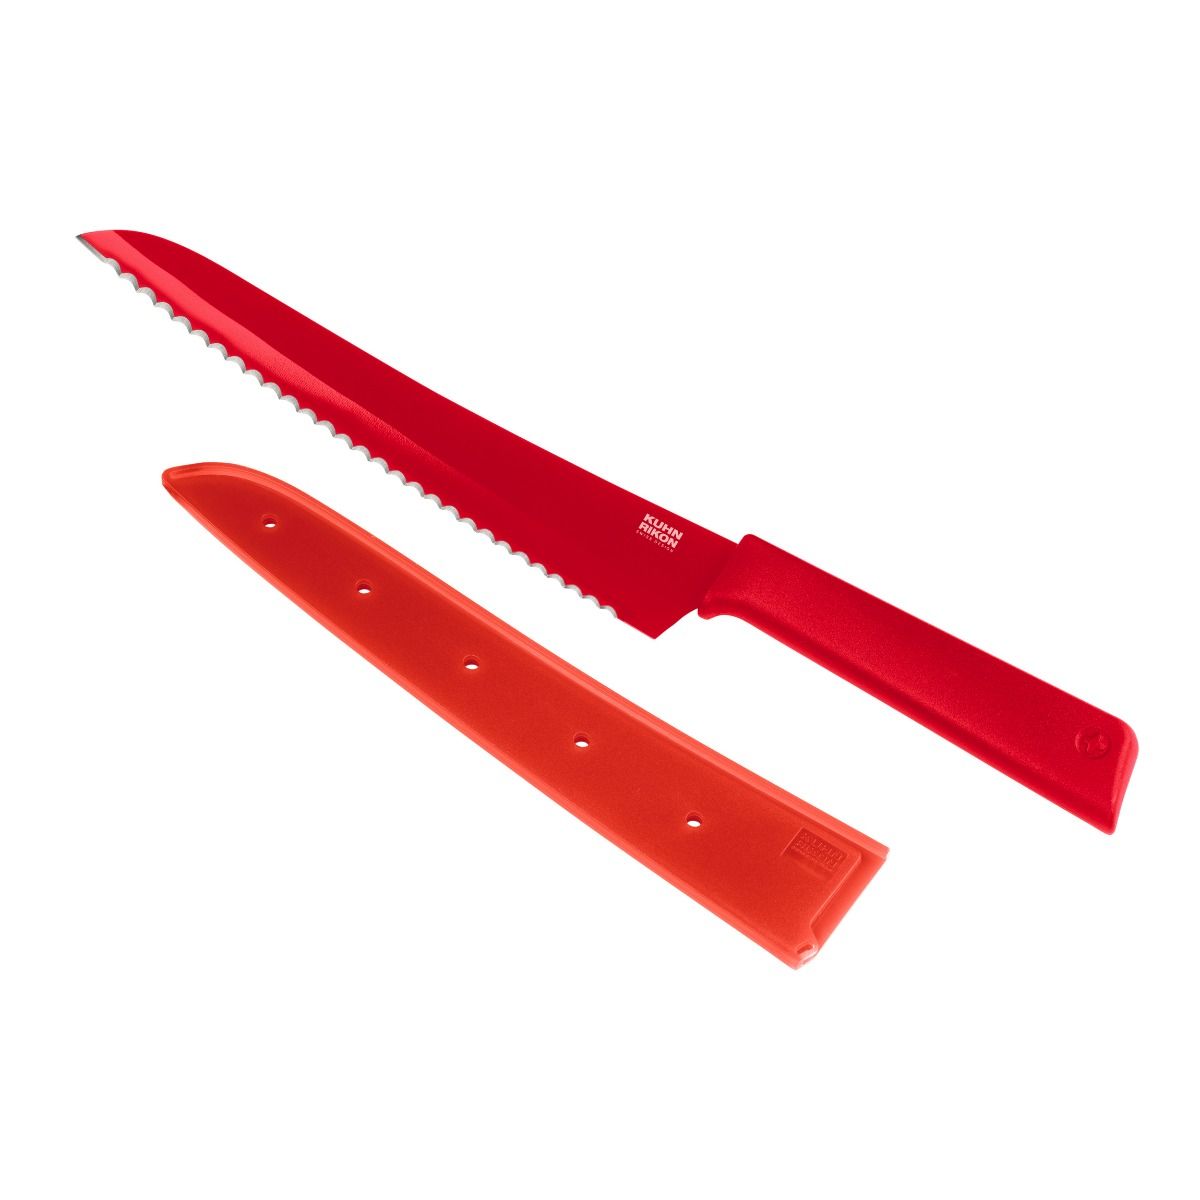 Kuhn Rikon Colori+ Bread Knife Red